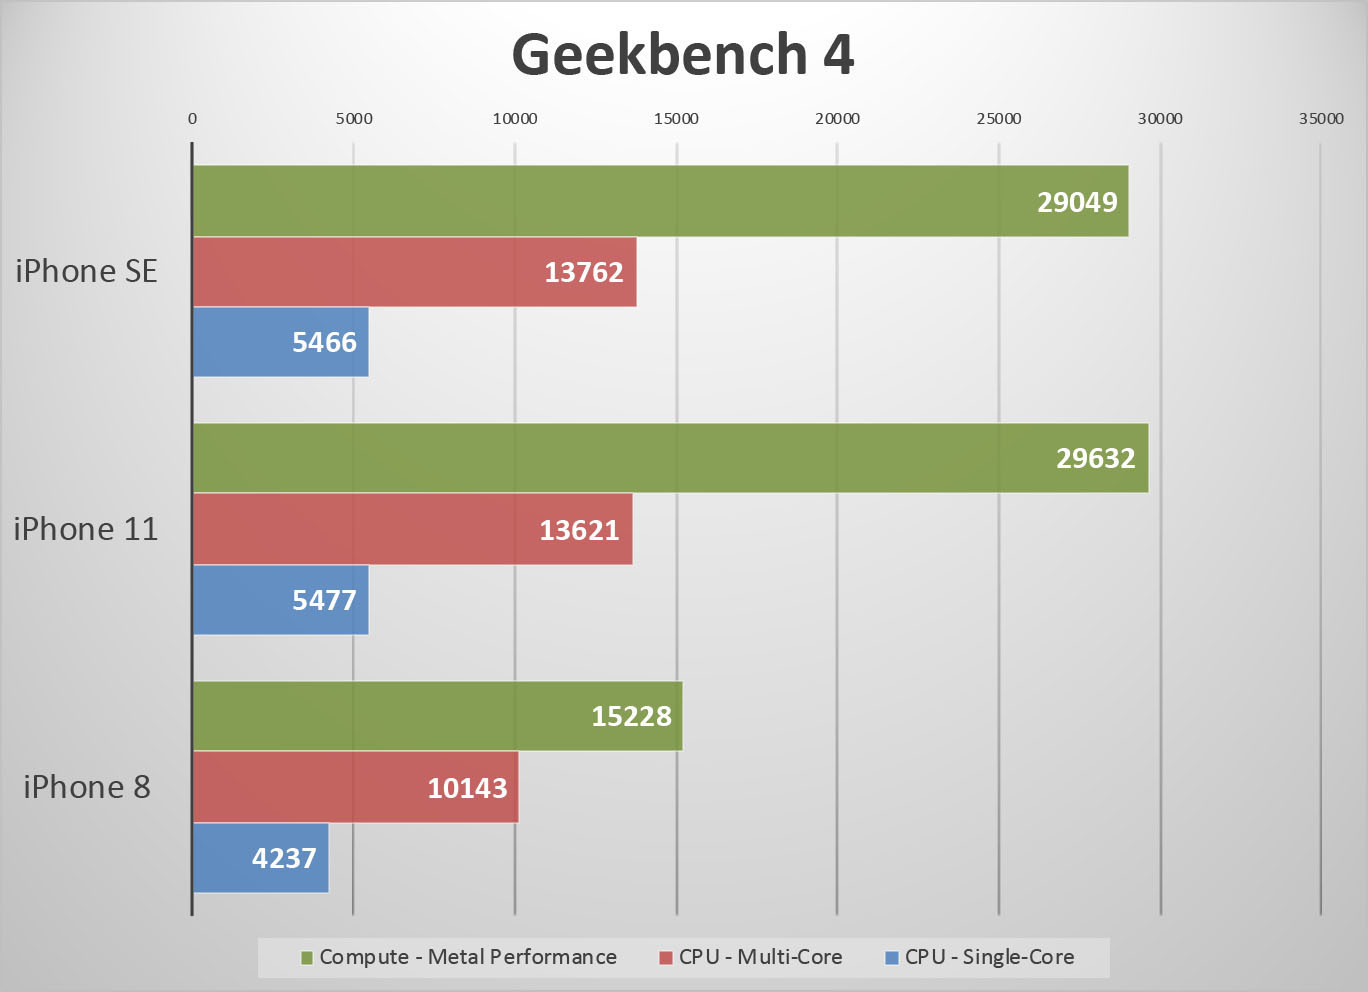 جدول مقایسه آیفون ها براساس Geekbench 4